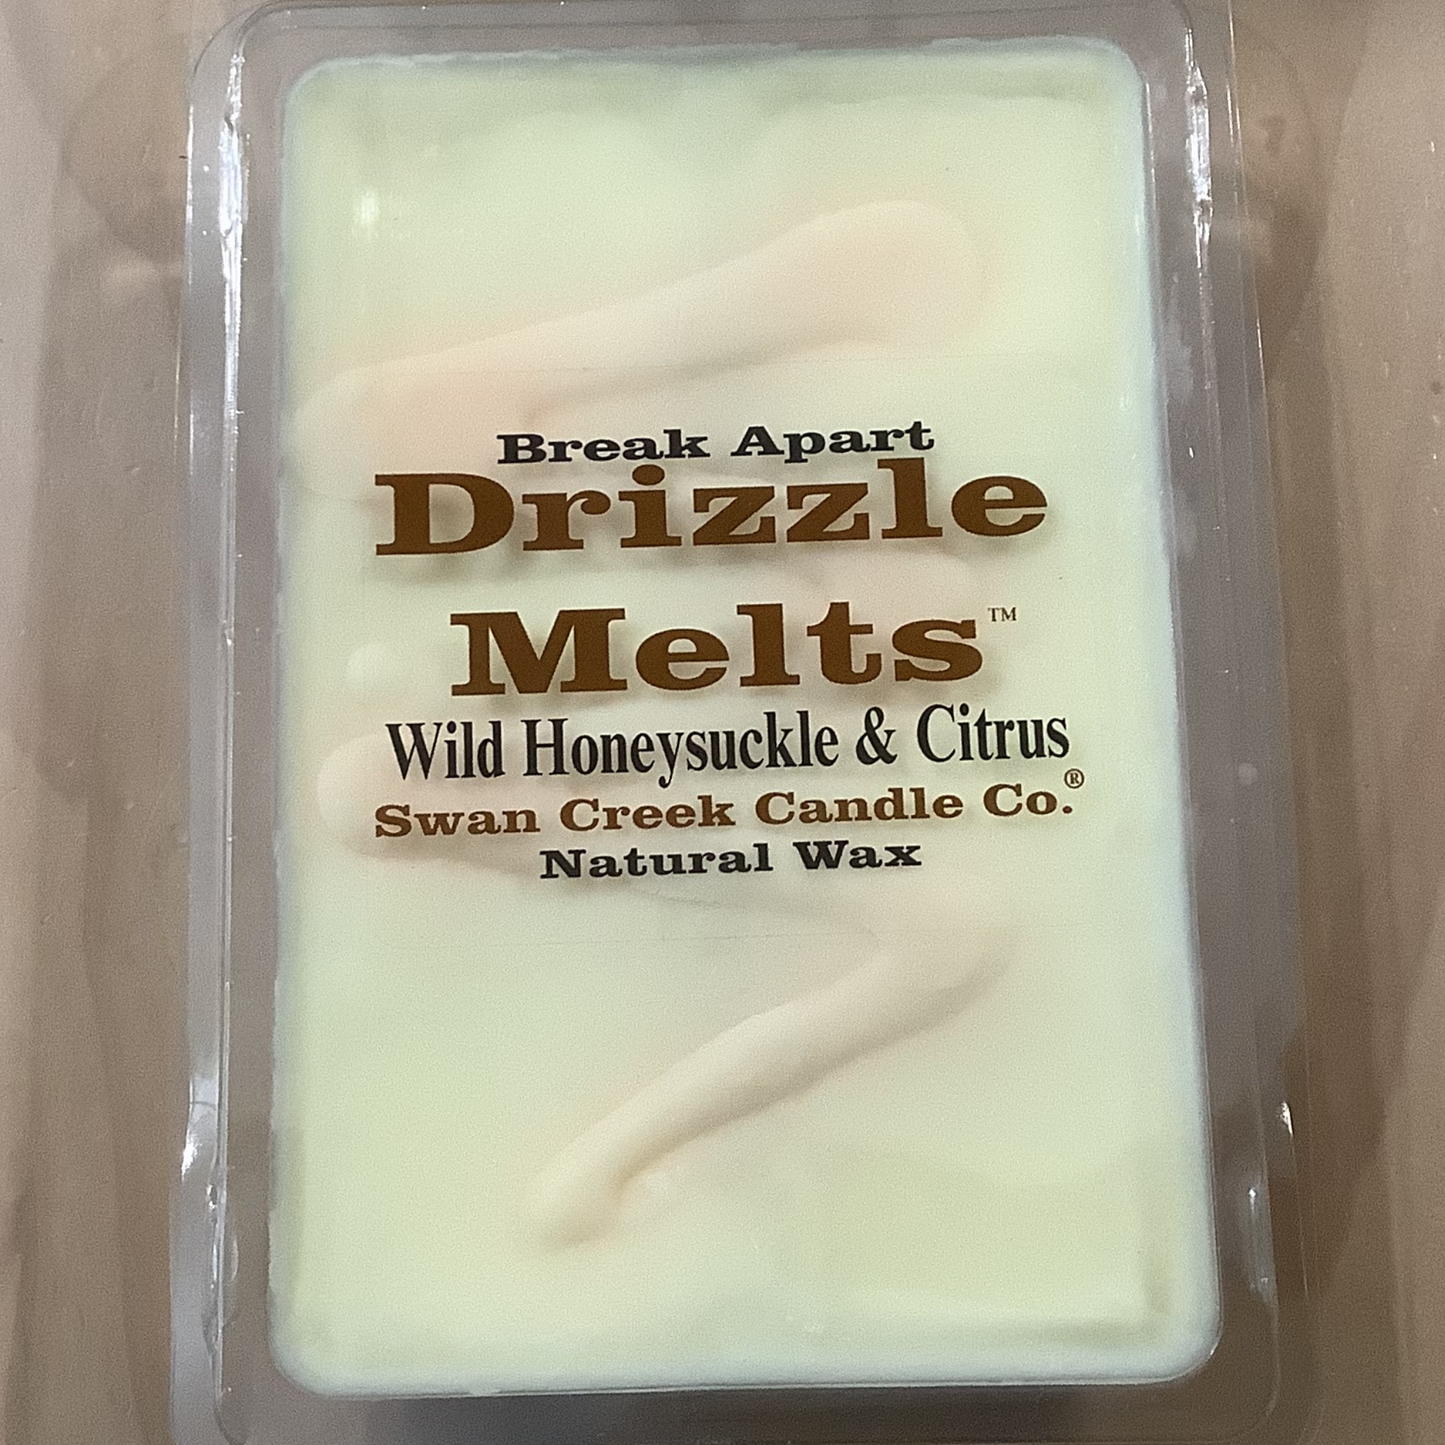 Wild Honeysuckle & Citrus Drizzle Melts